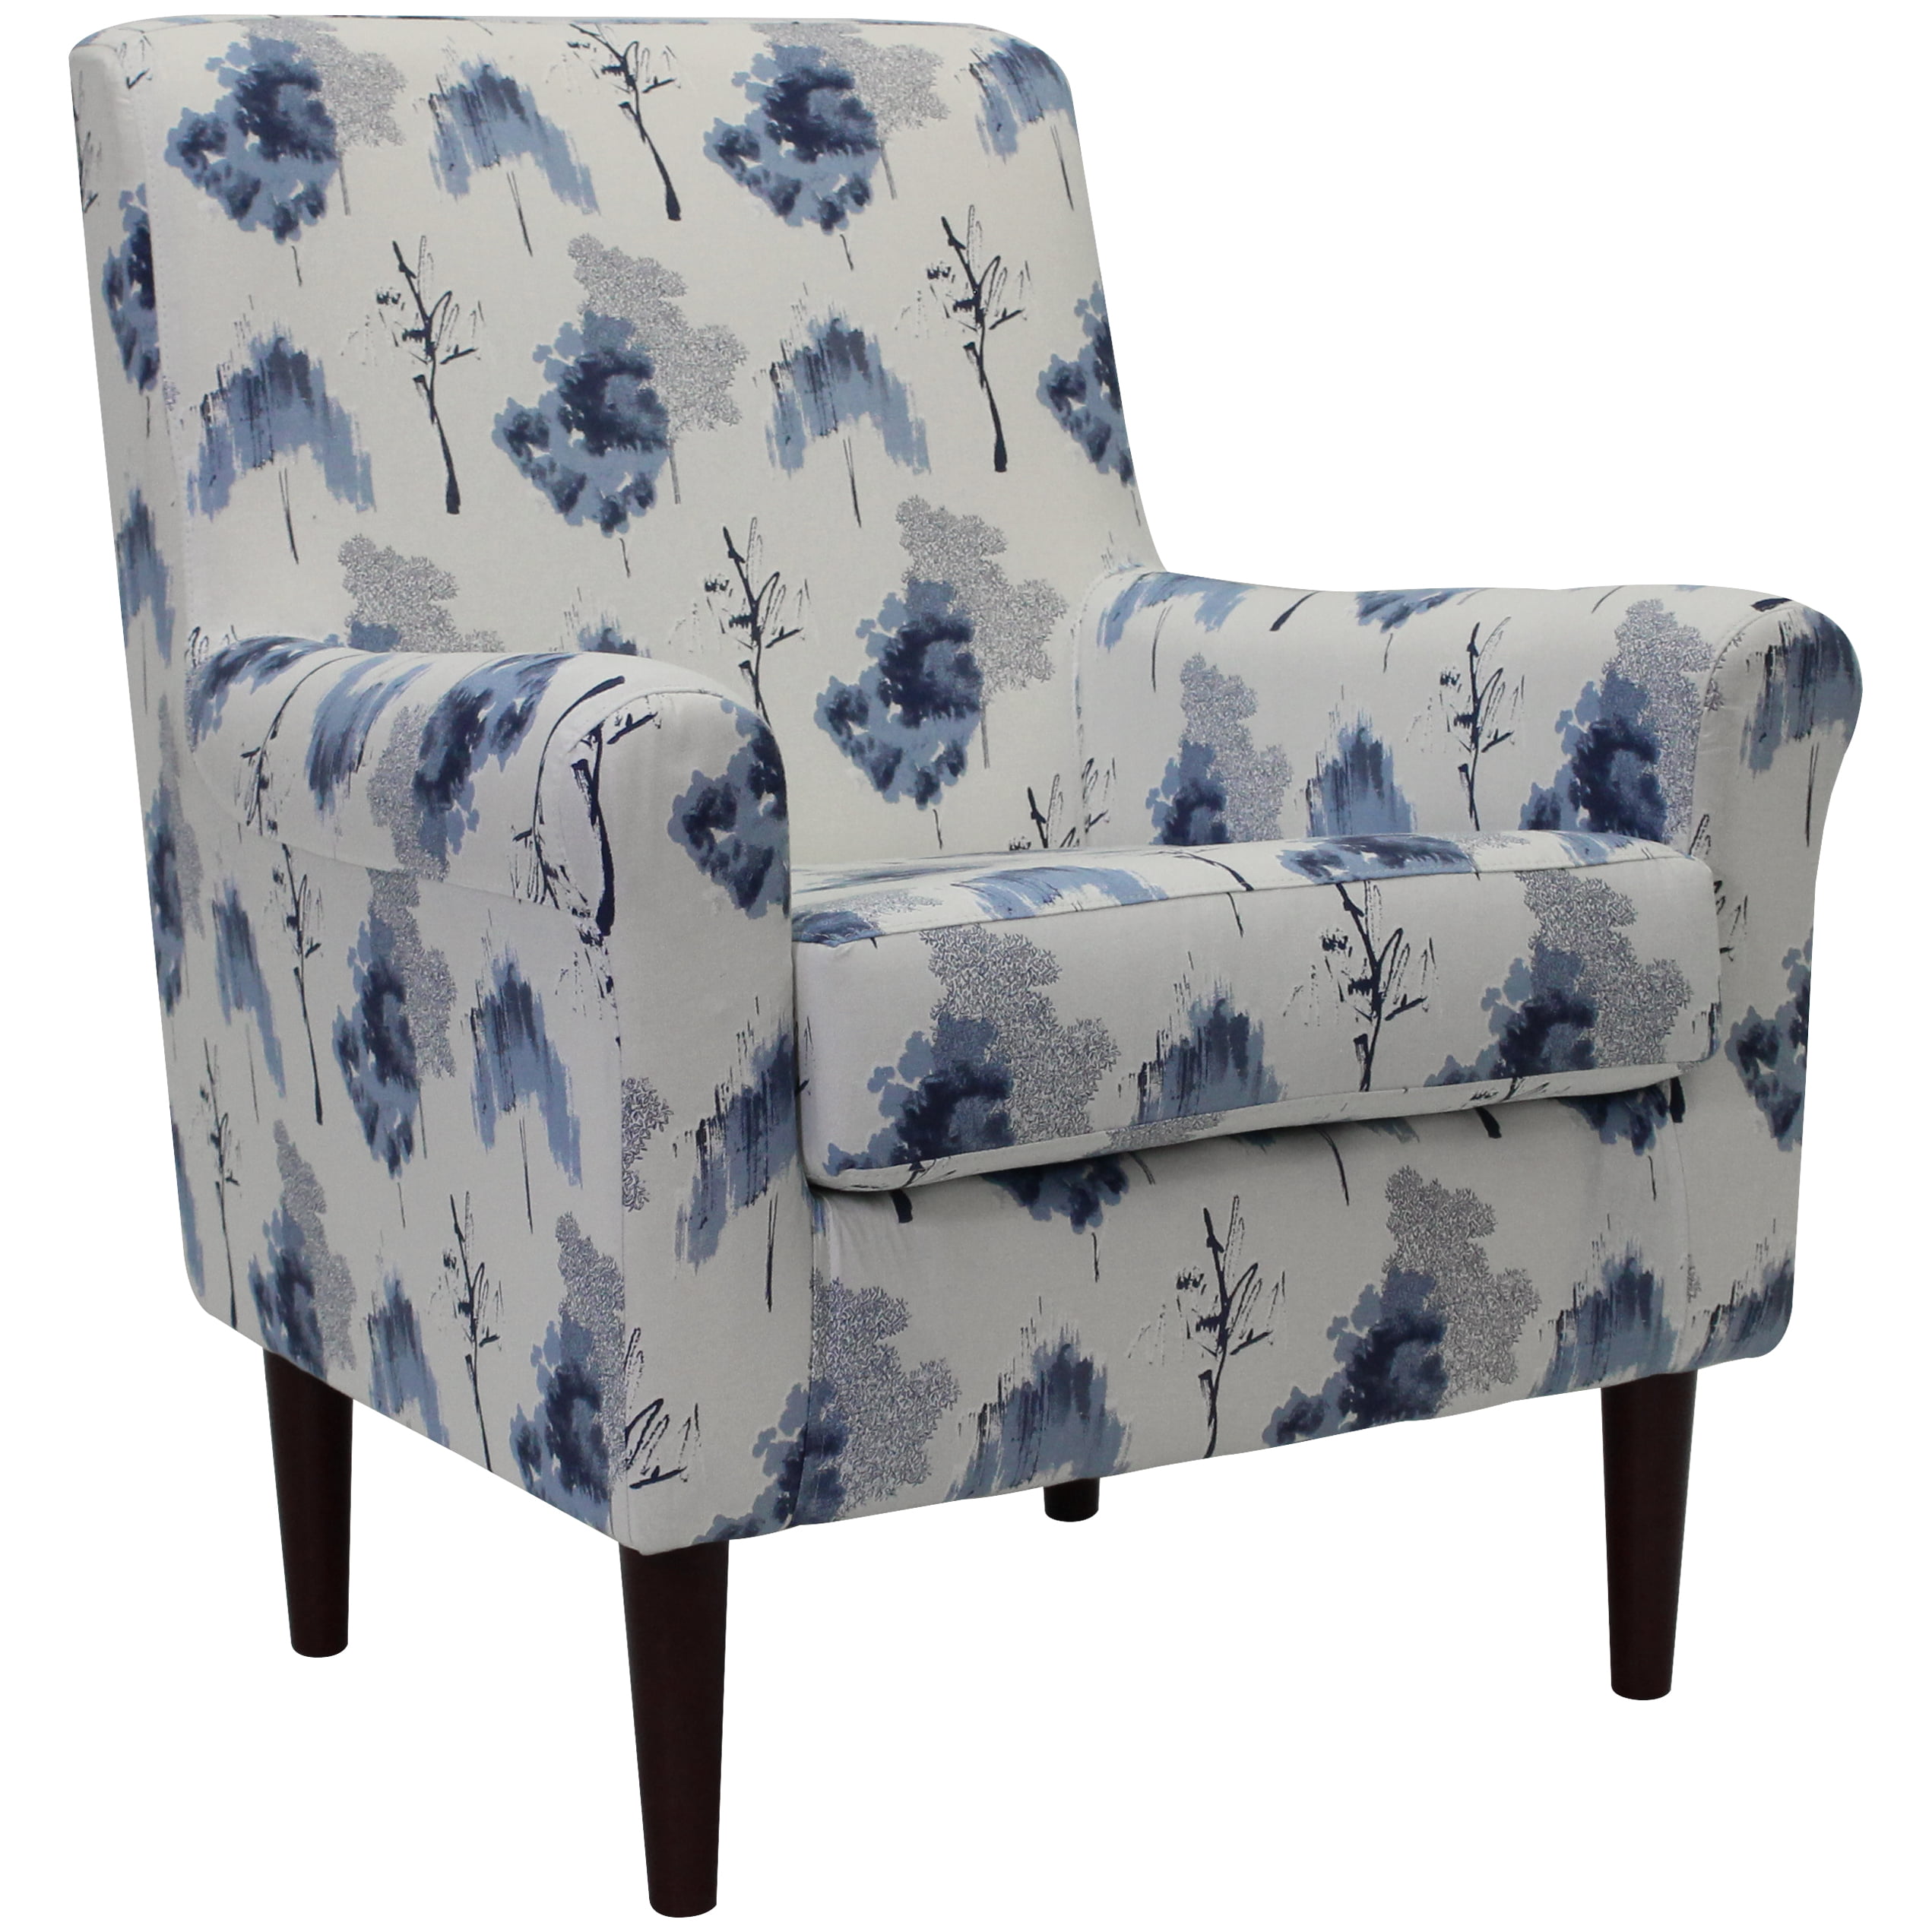 Mainstays Raelynn Lounge Chair, Blue